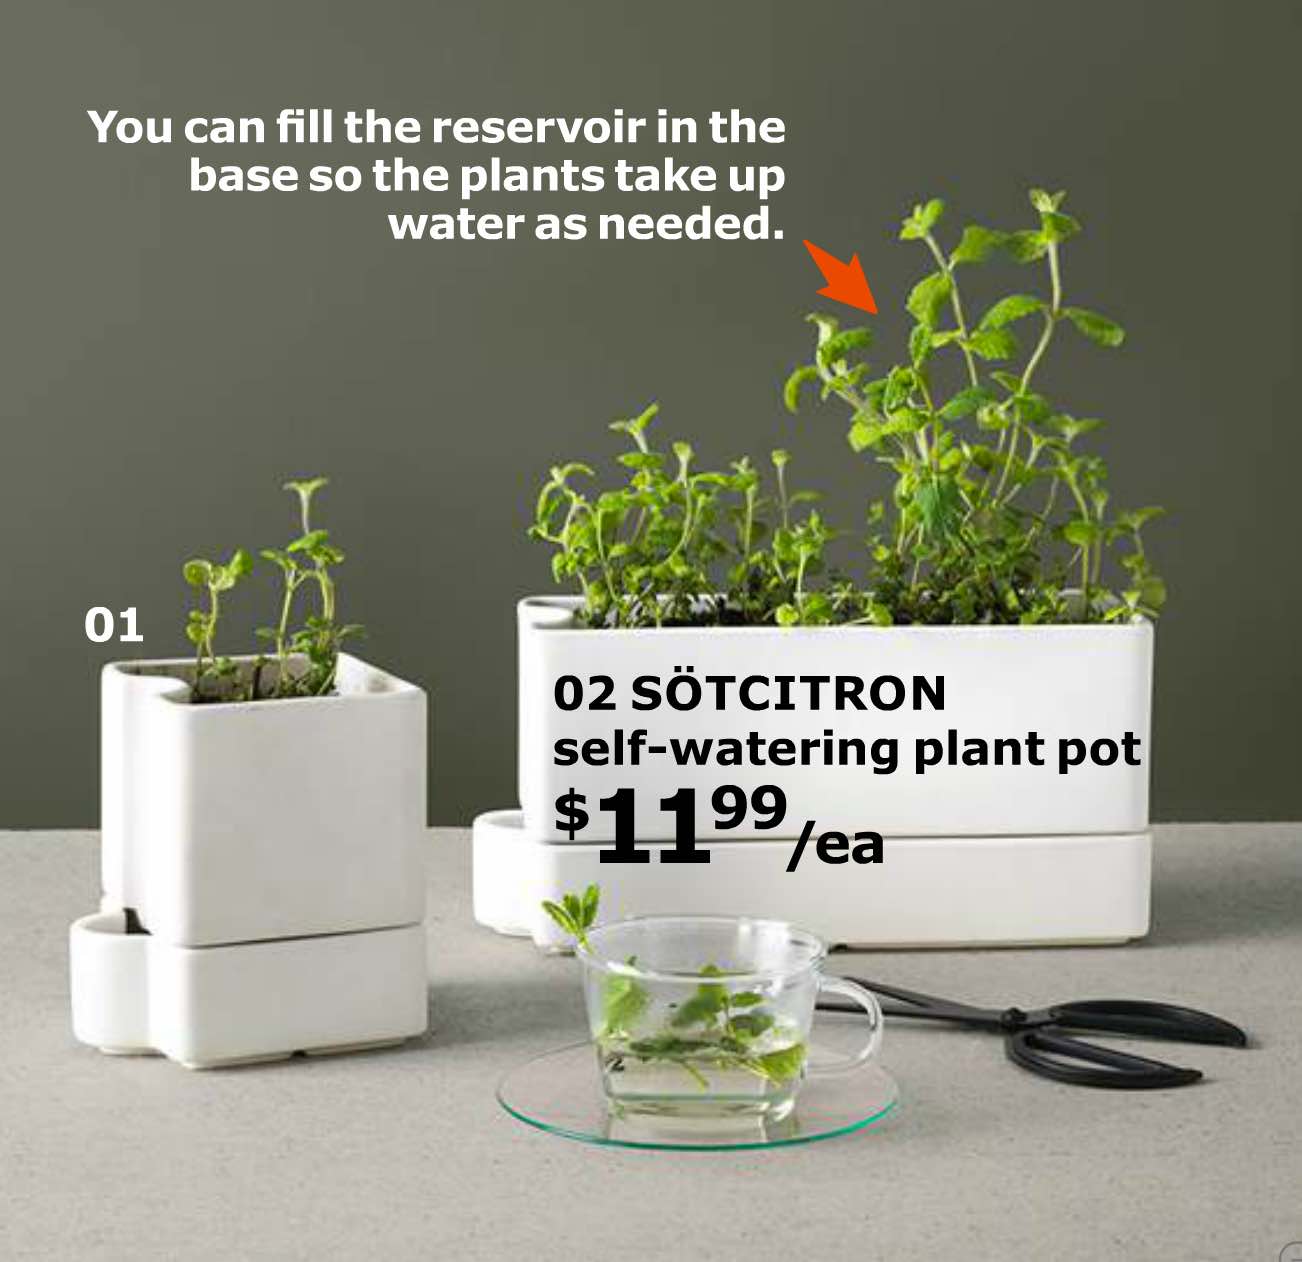 Sotcitron self watering plant pot